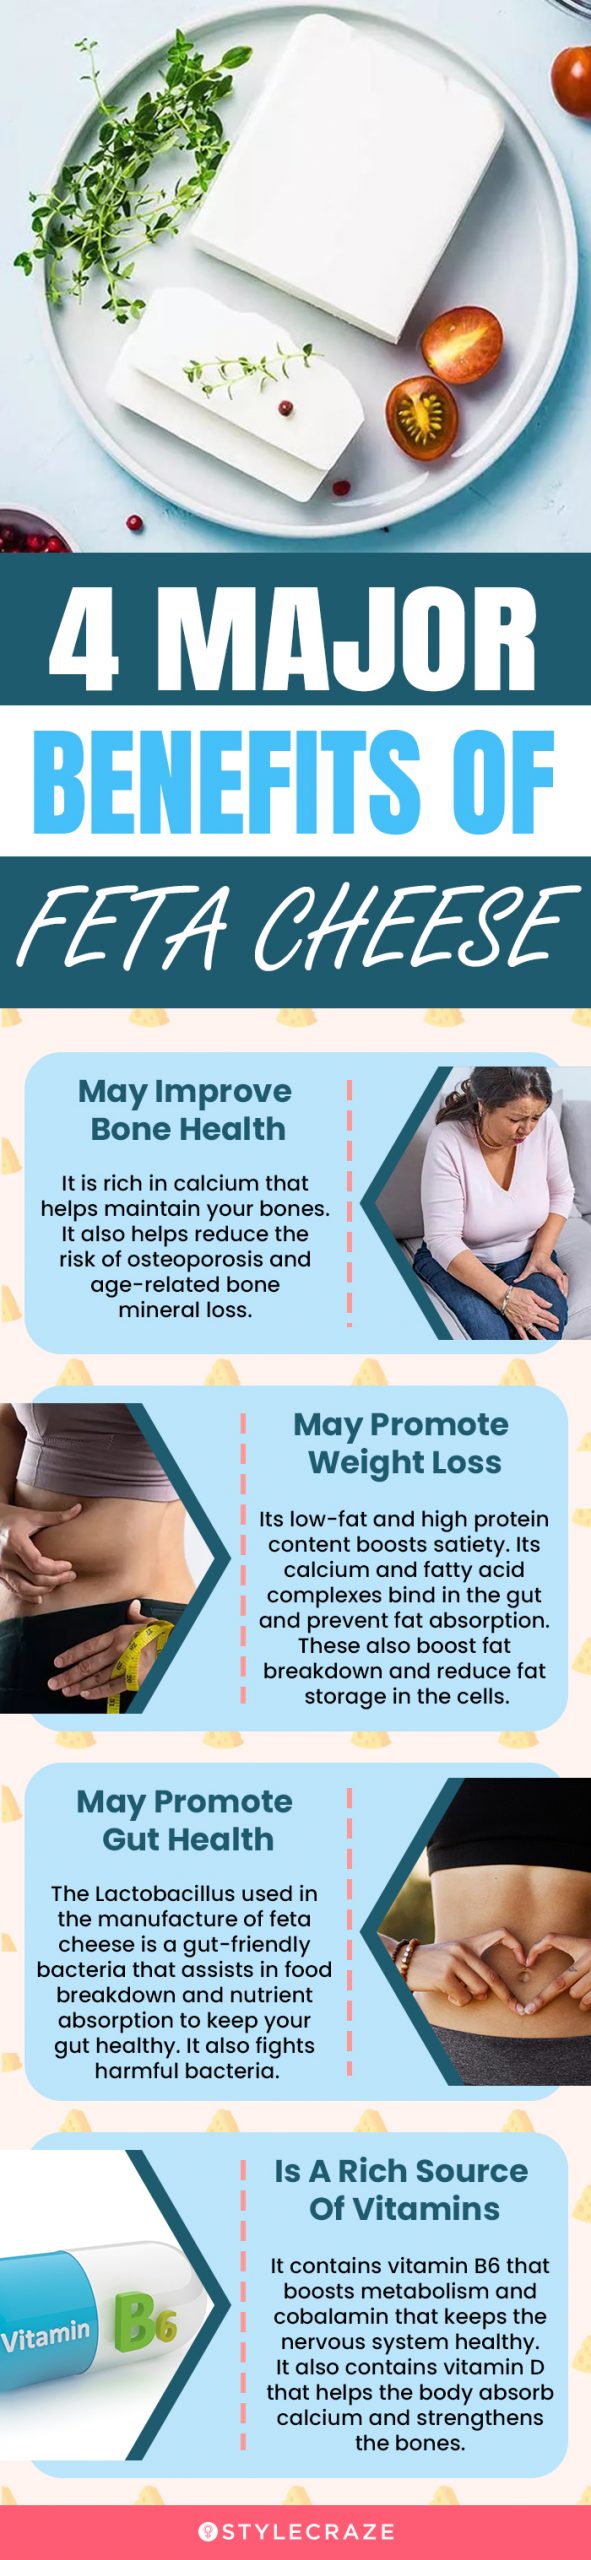 4 major benefits of feta cheese (infographic)